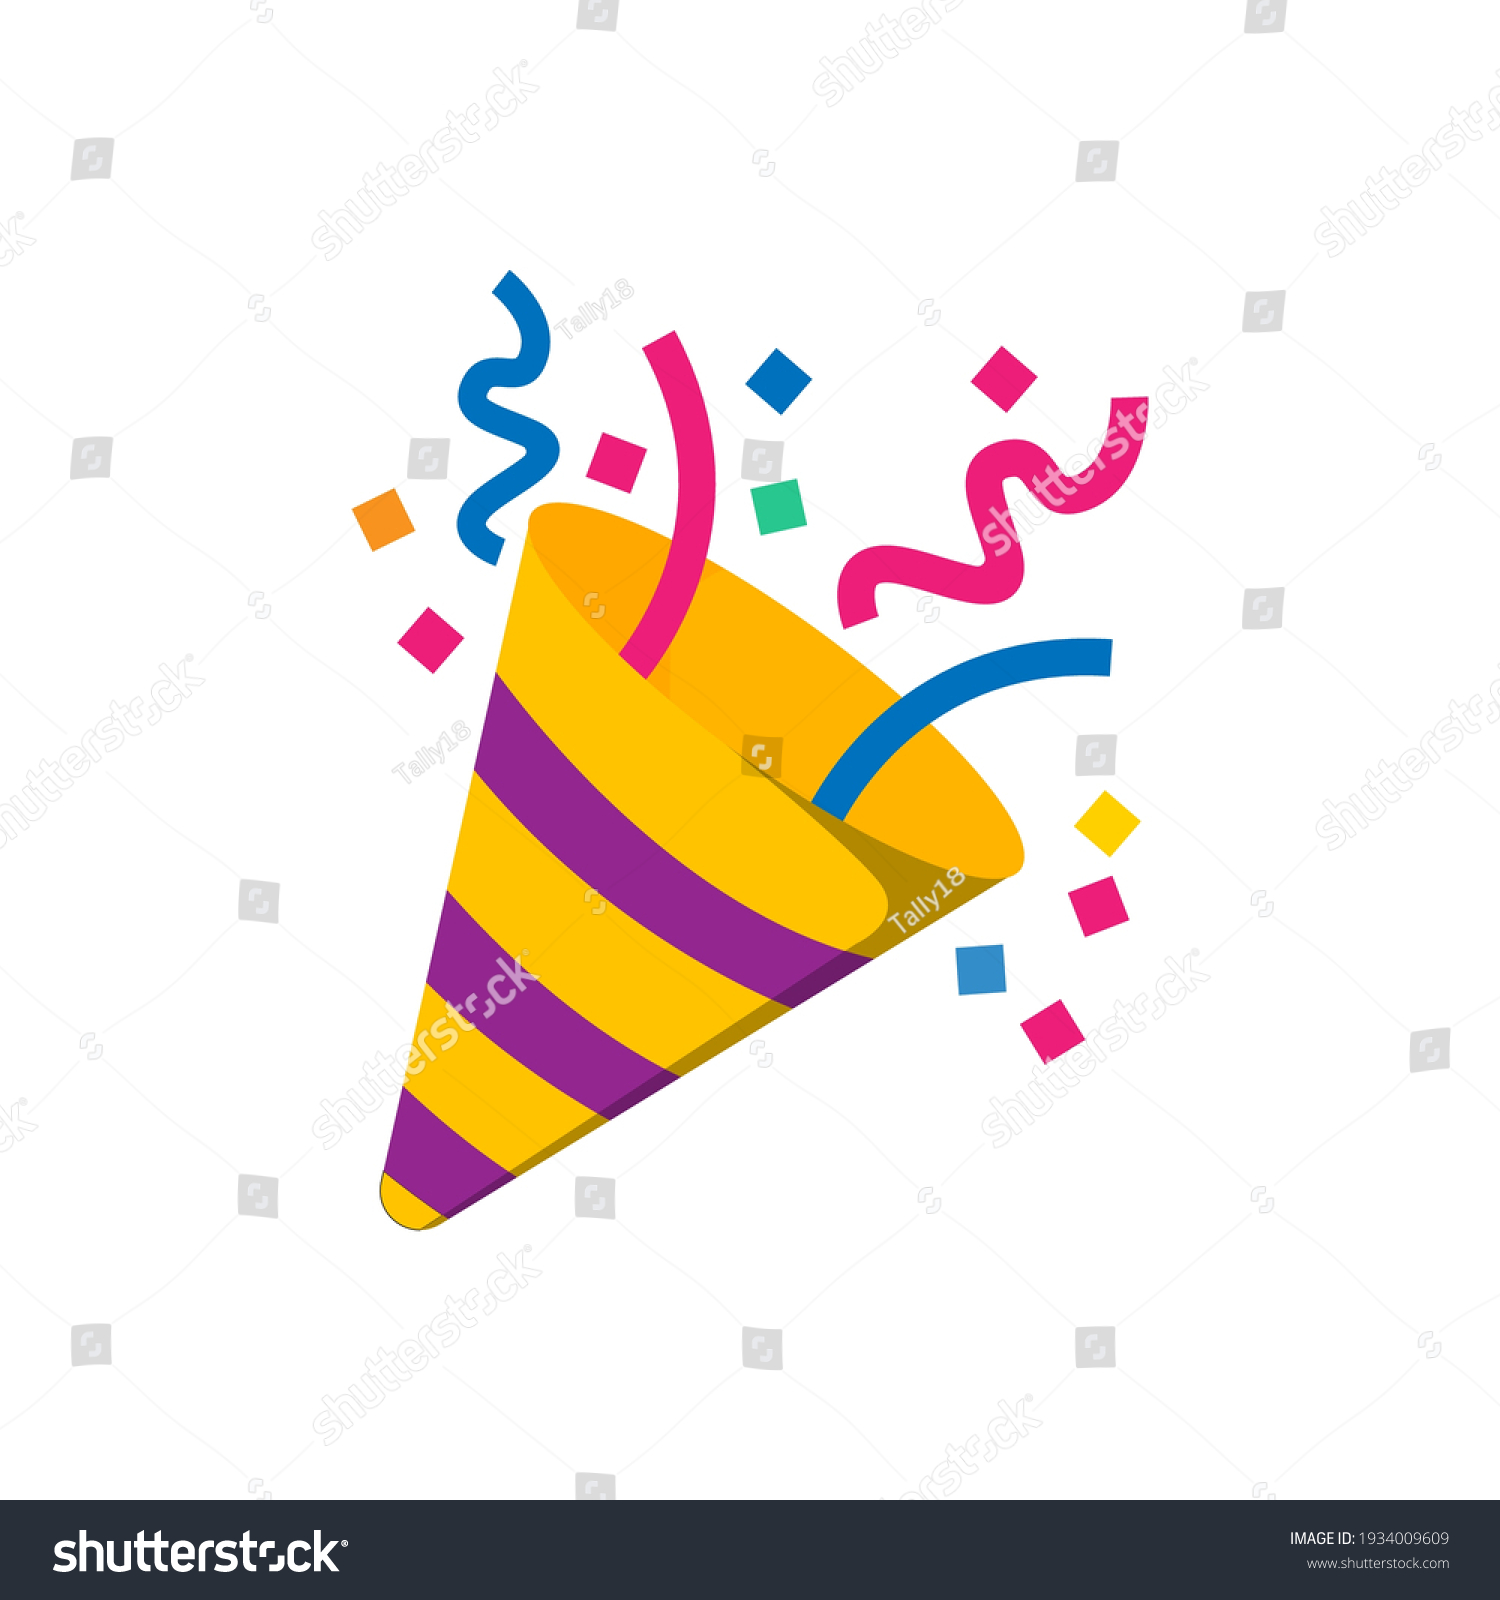 Party popper emoji icon .Confetti logo,congratulate and celebrate elements.Vector party poppers .Exploding cracker icon. #1934009609